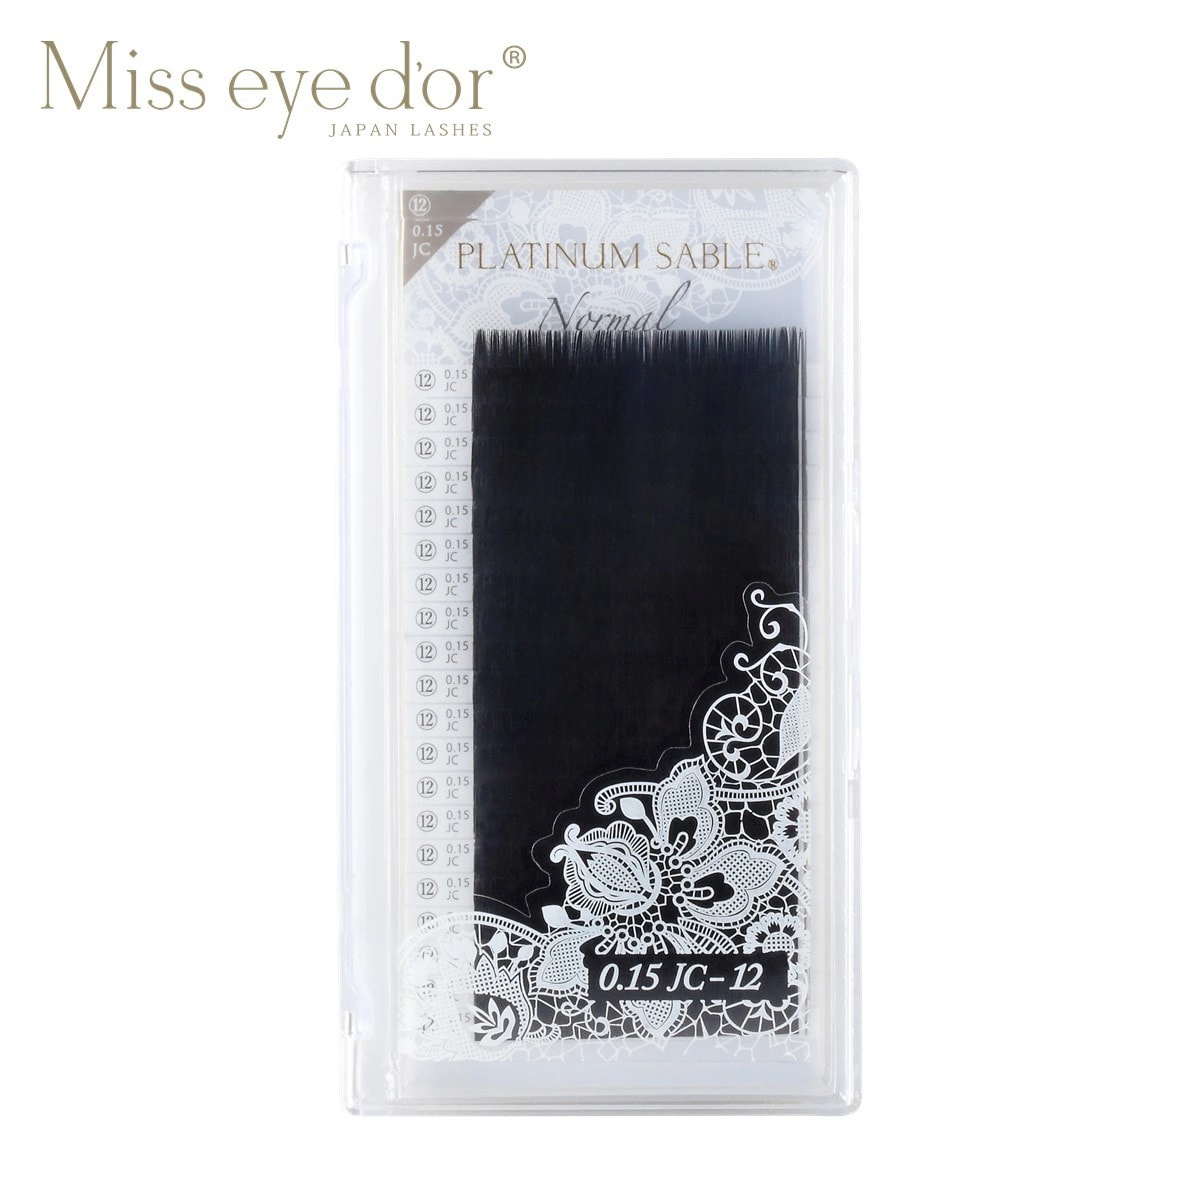 【Miss eye d'or】プラチナセーブル